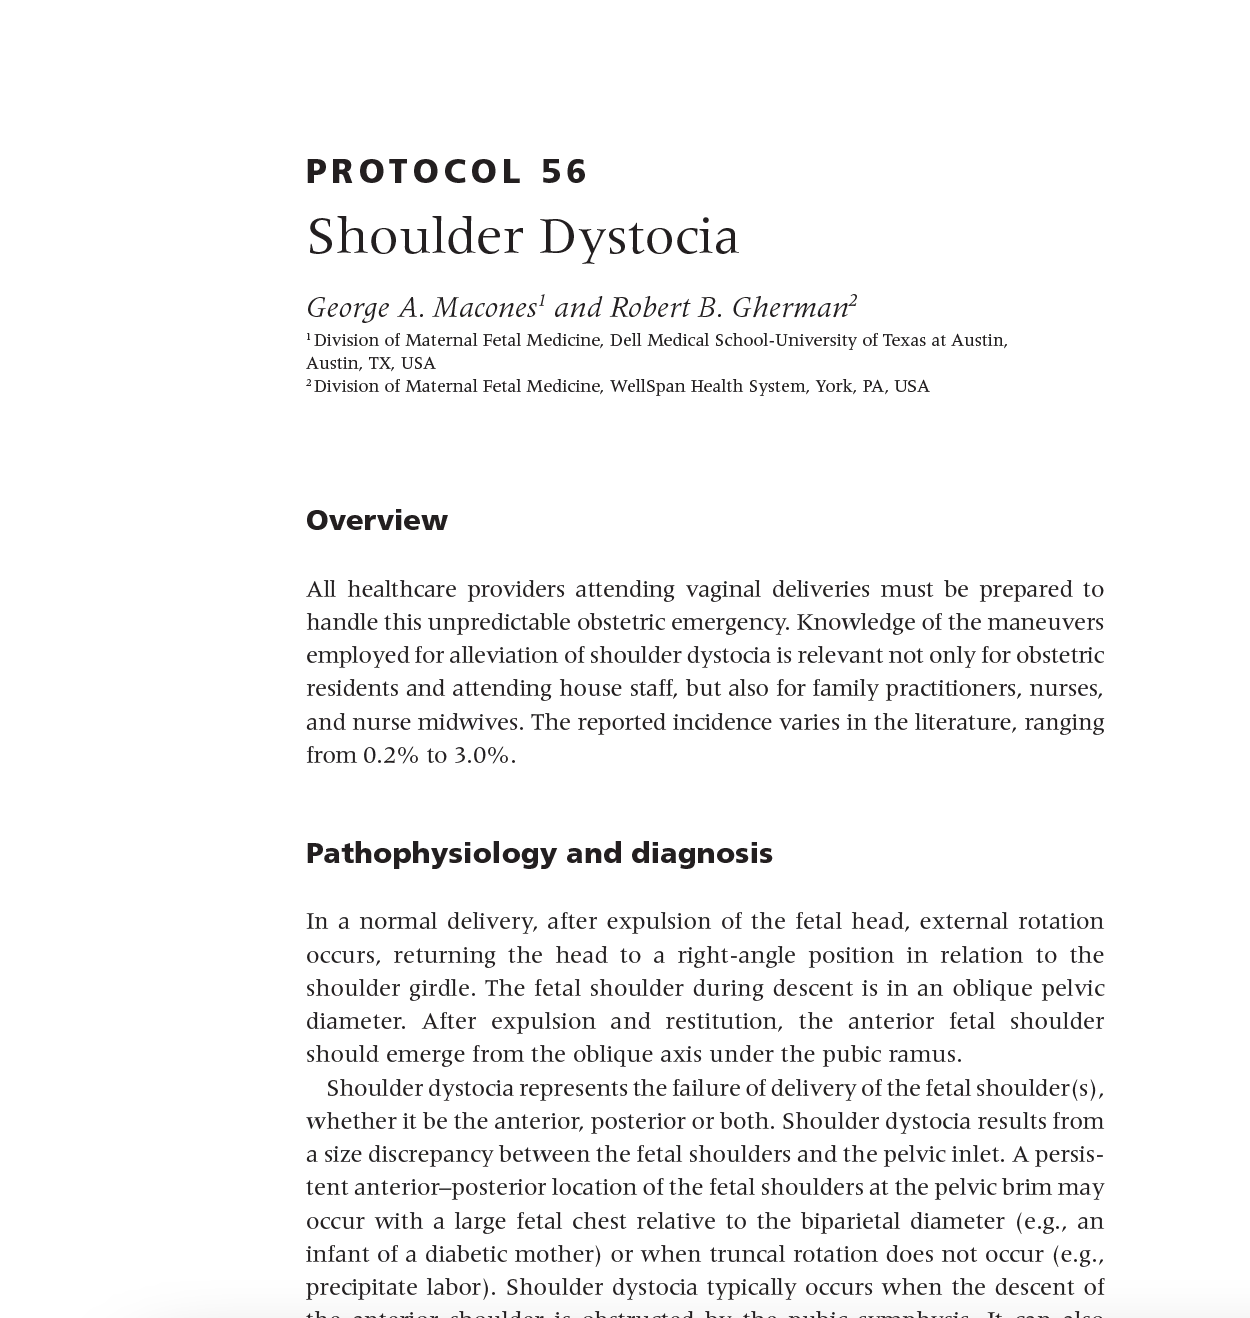 Protocols for High-Risk Pregnancies, 7th Edition: Protocol 56 - Shoulder Dystocia